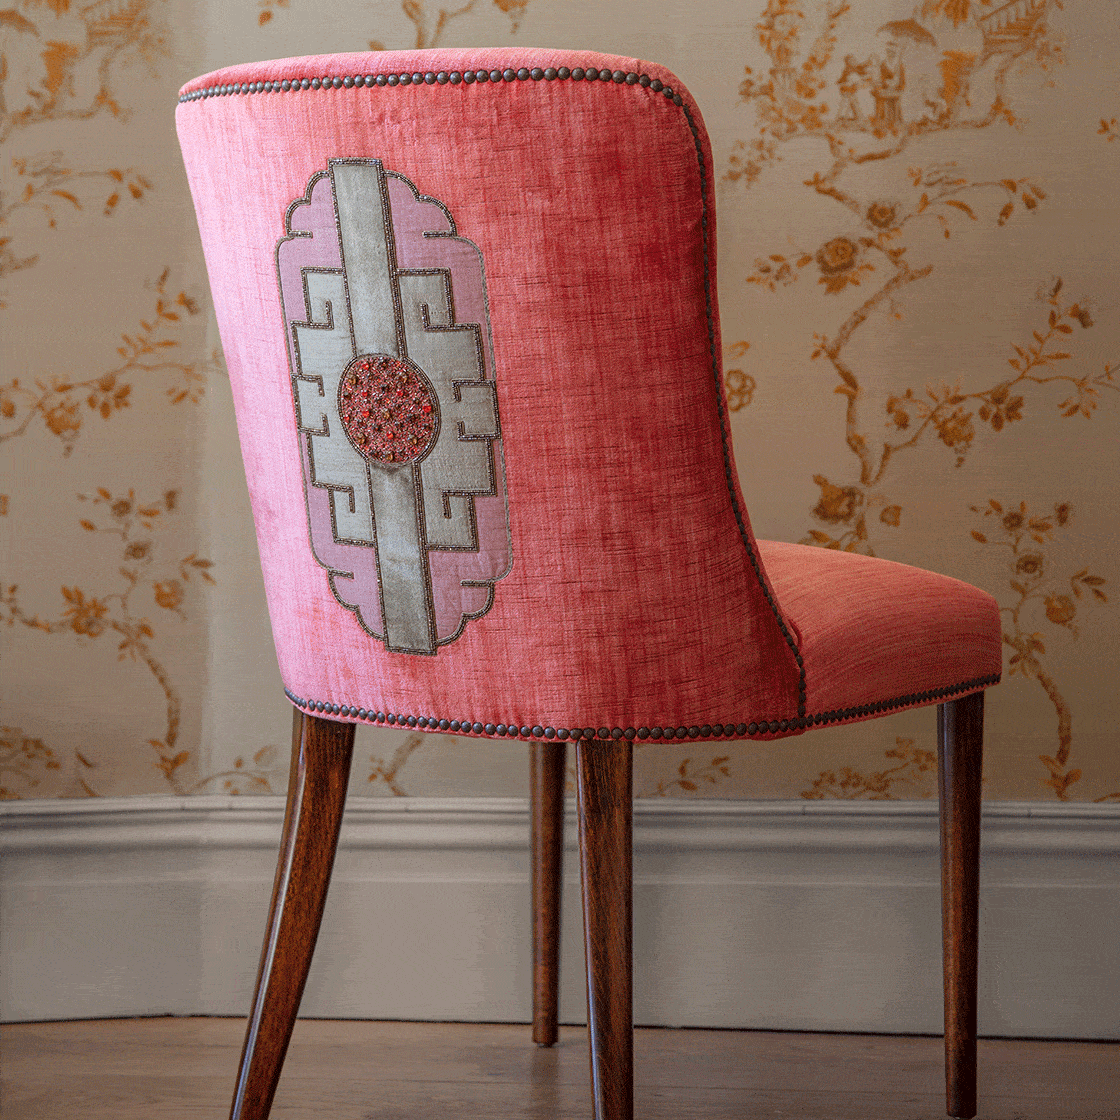 Tamburlaine embroidery on Calypso dining chair in Como silk velvet - Pompeiian red